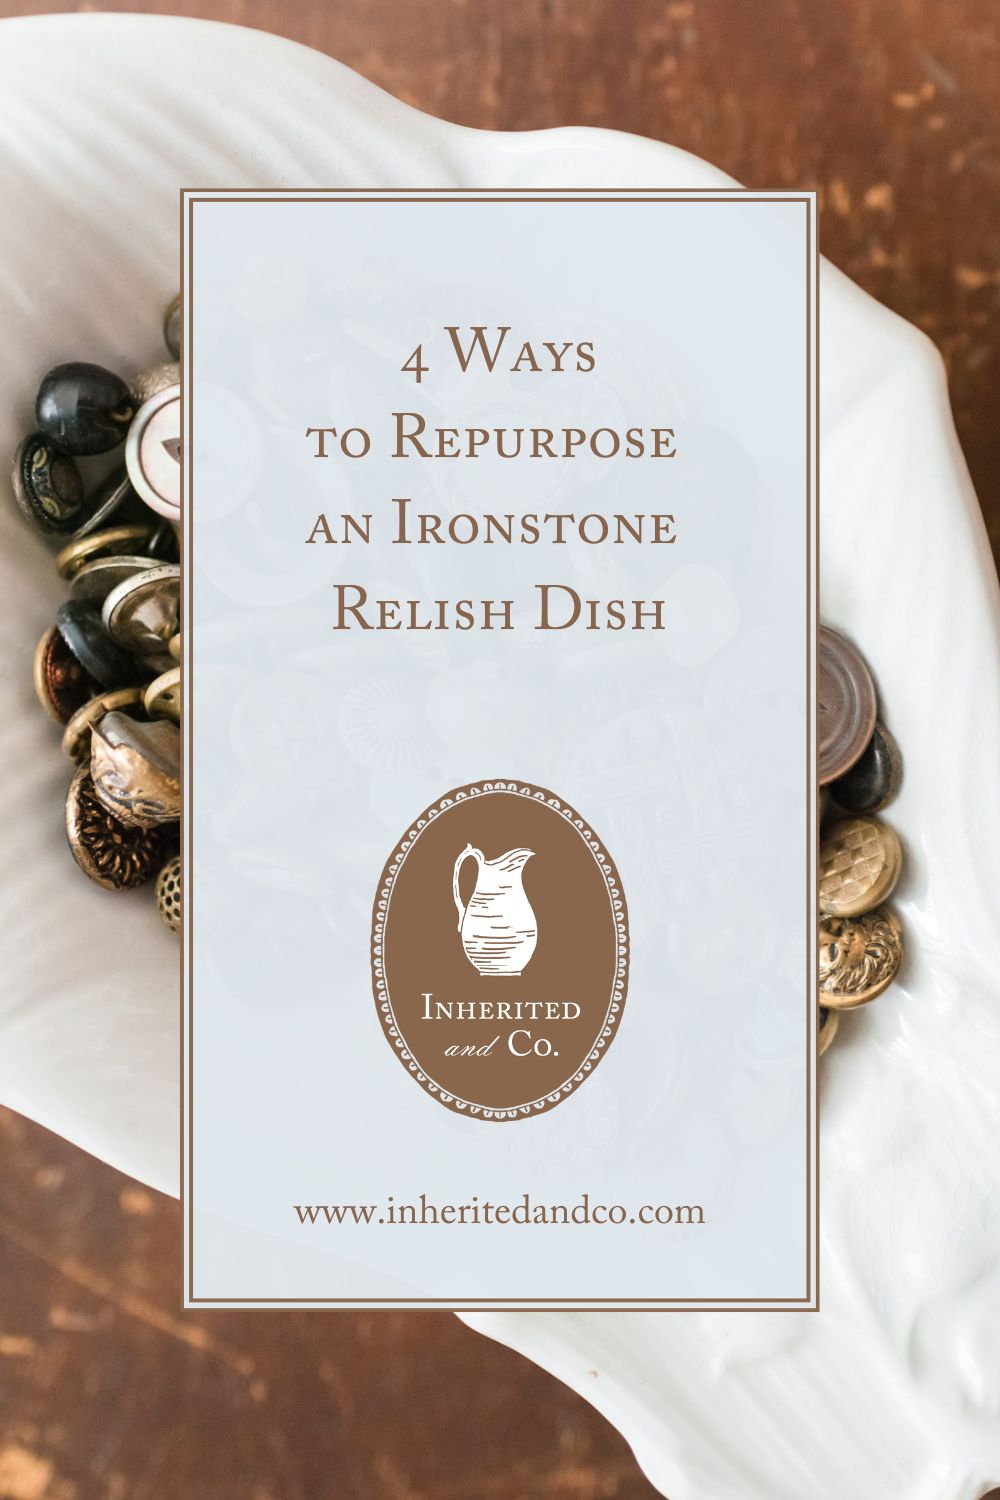 "4 Ways to Repurpose an Ironstone Relish Dish"